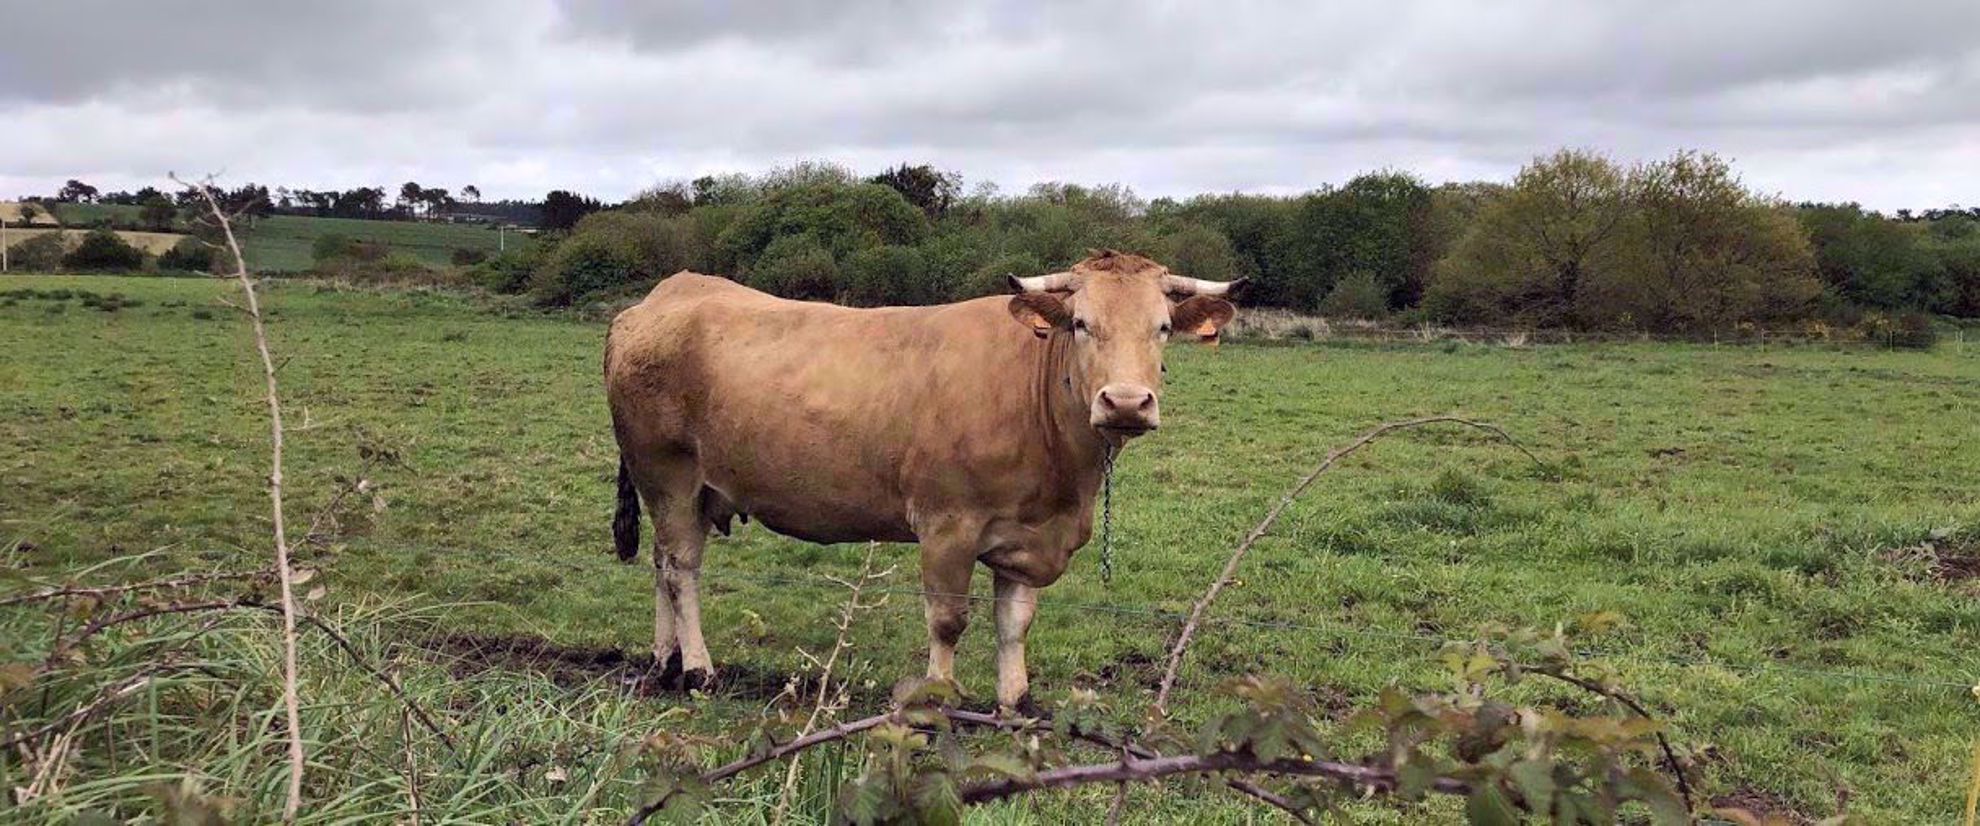 Bull in field near camino de santiago